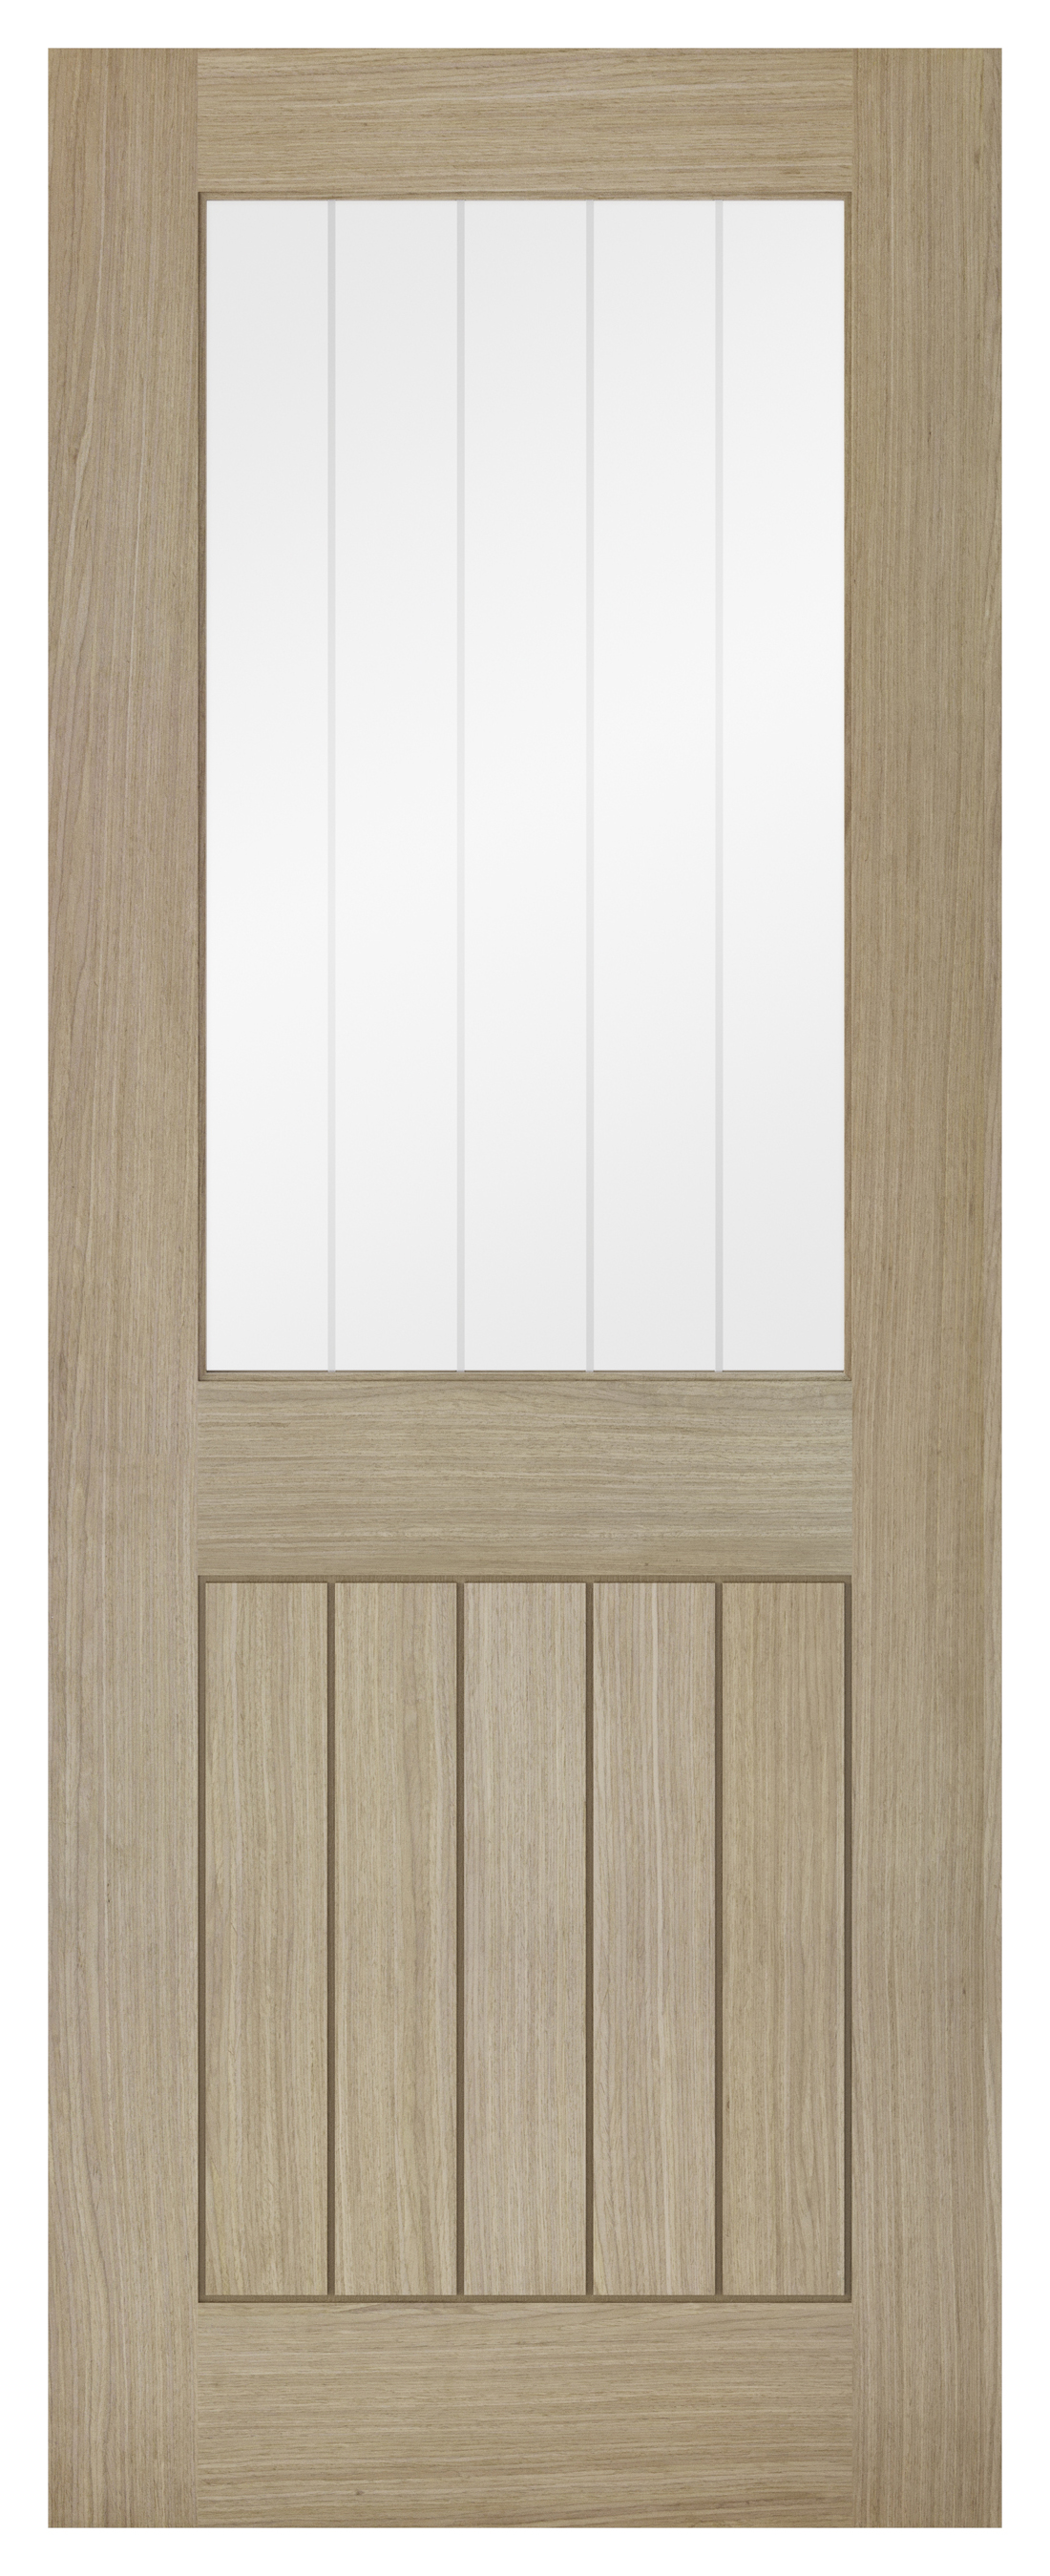 Image of LPD Internal Belize 1 Lite Pre-Finished Light Grey Solid Core Door - 826 x 2040mm